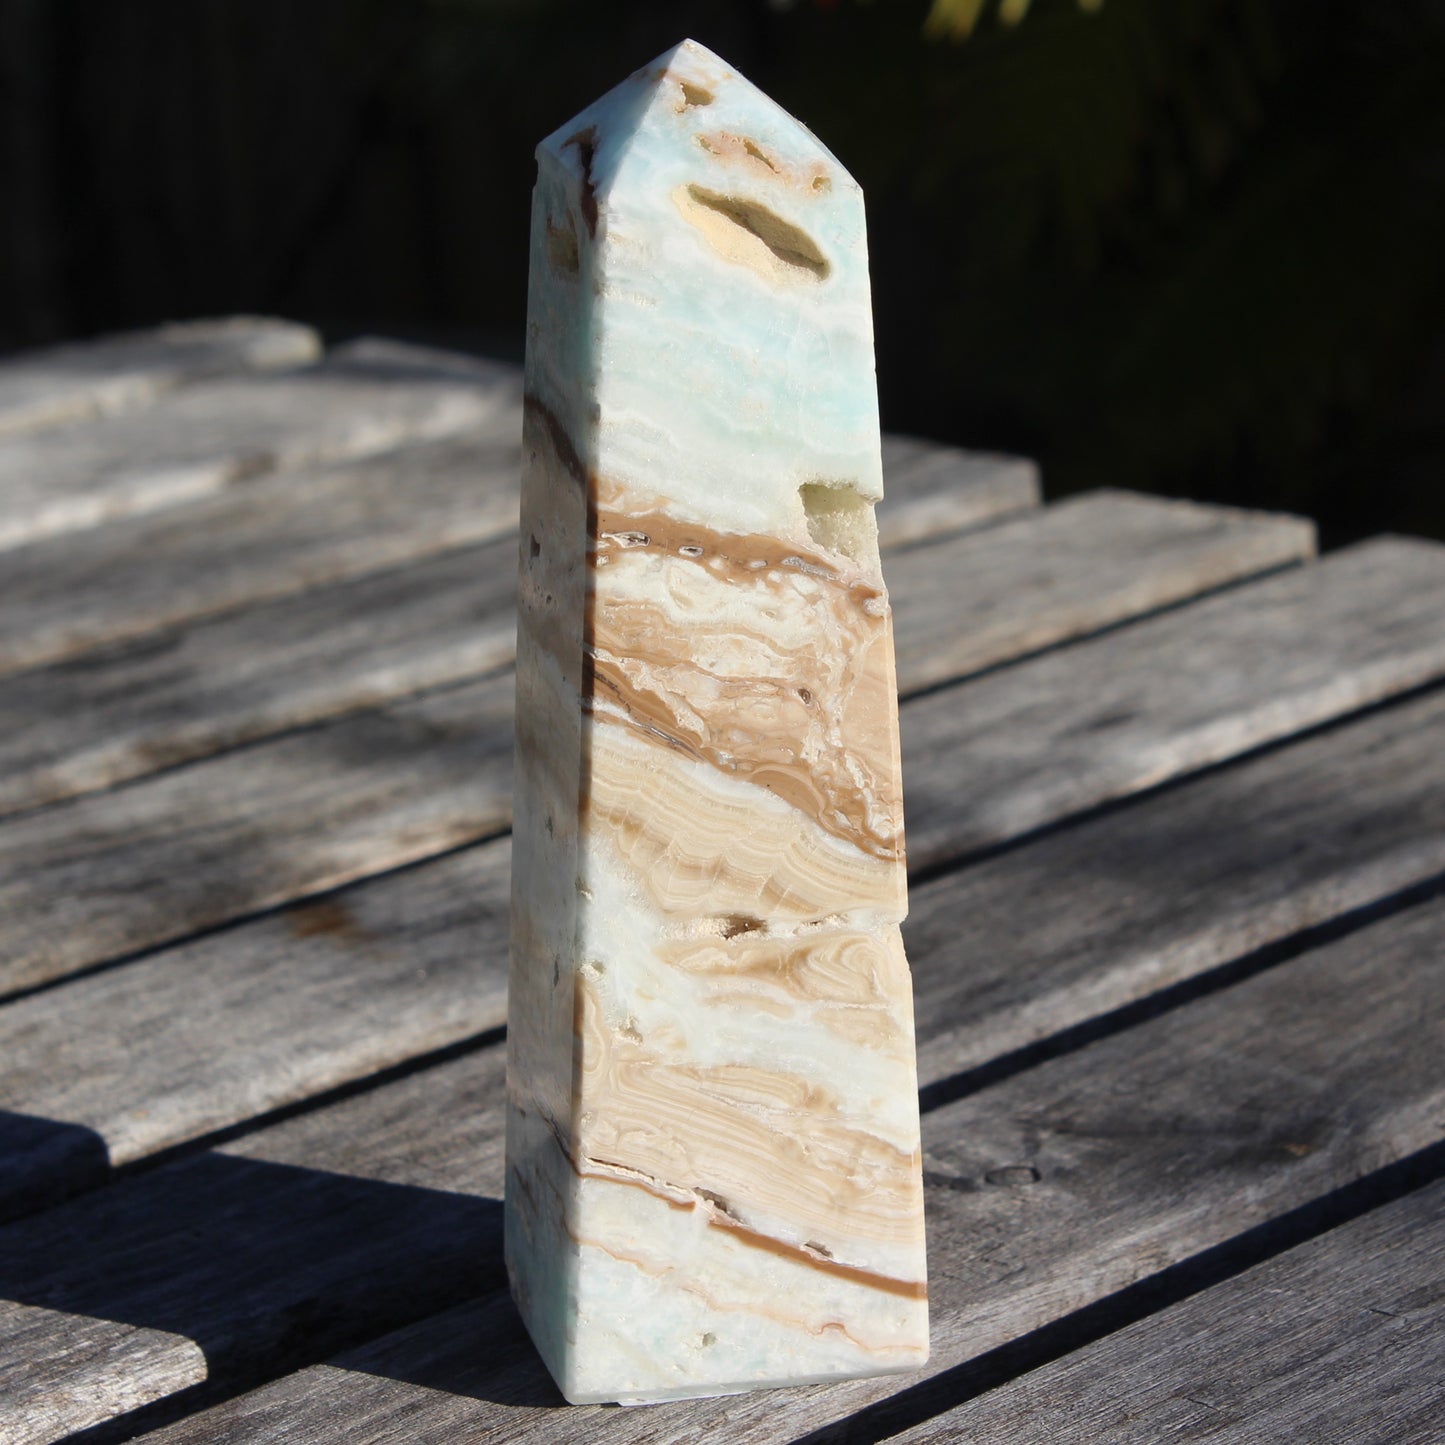 Caribbean aqua blue Calcite obelisk 479g